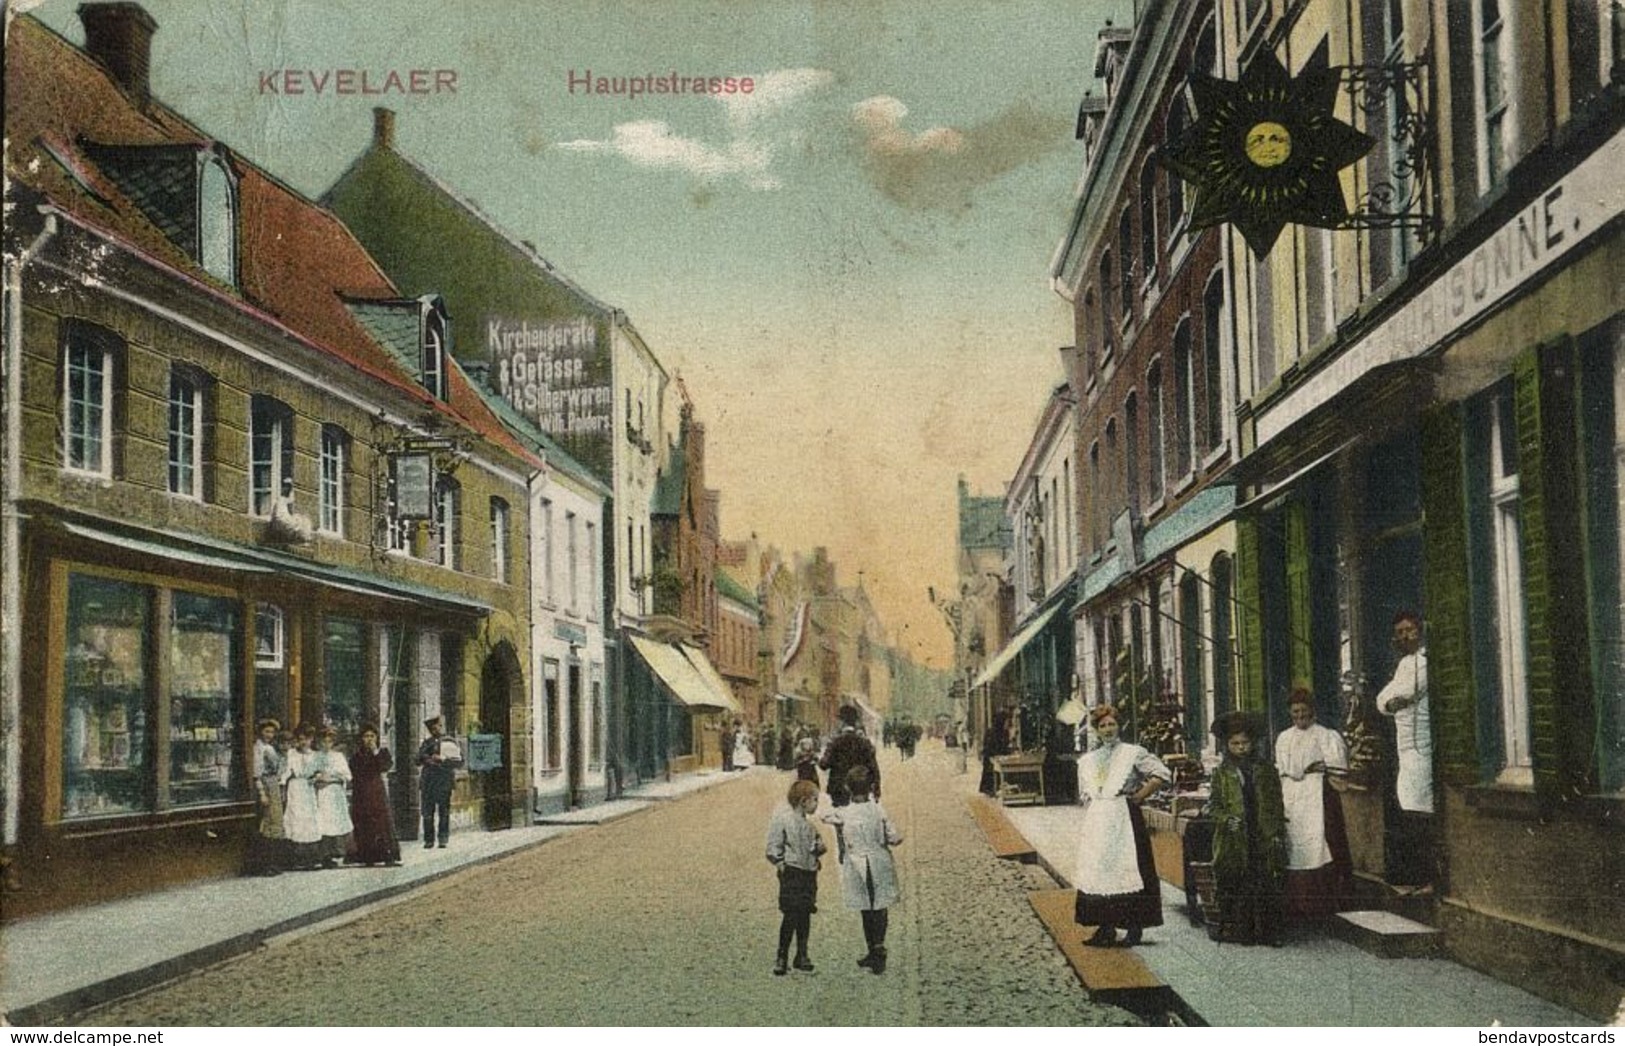 KEVELAER, Hauptstrasse (1909) AK (2) - Kevelaer